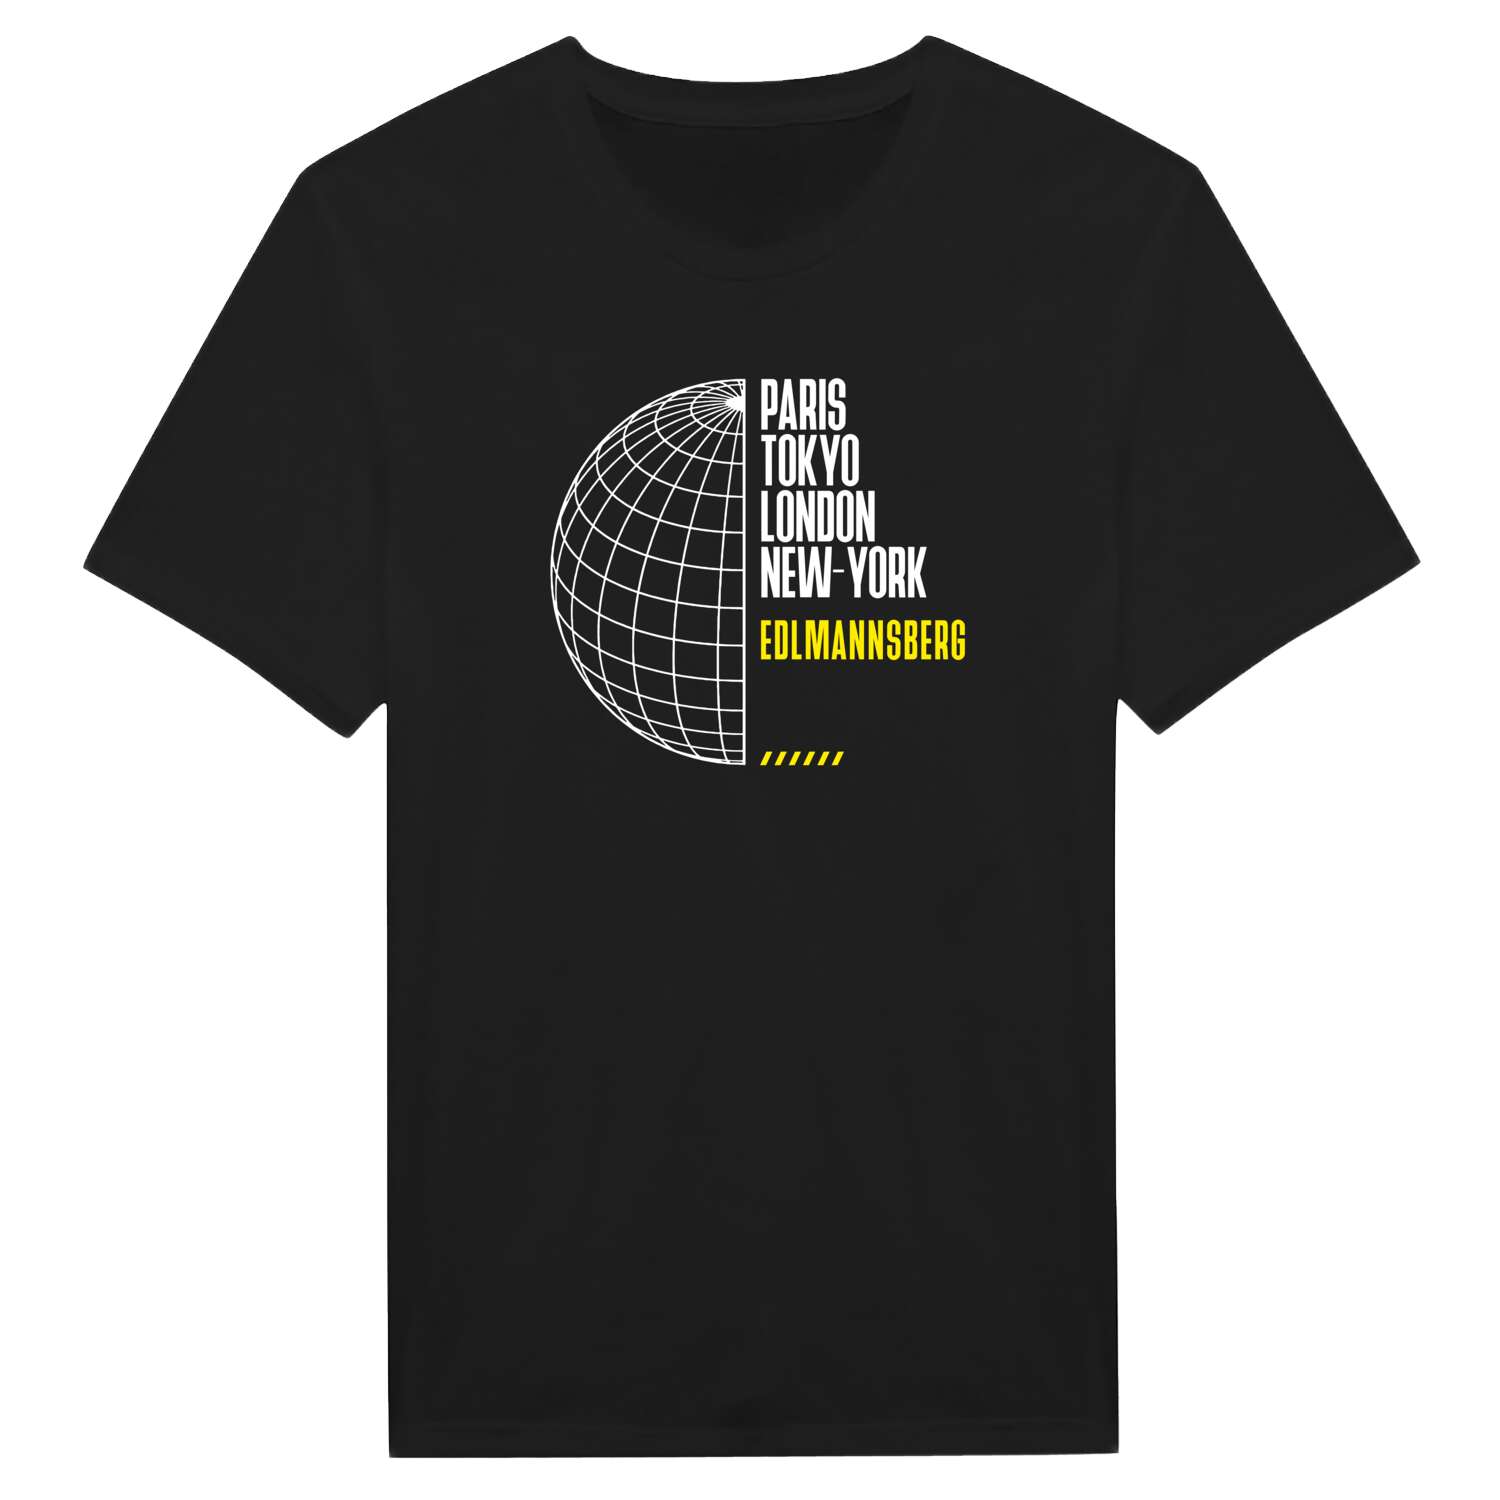 Edlmannsberg T-Shirt »Paris Tokyo London«